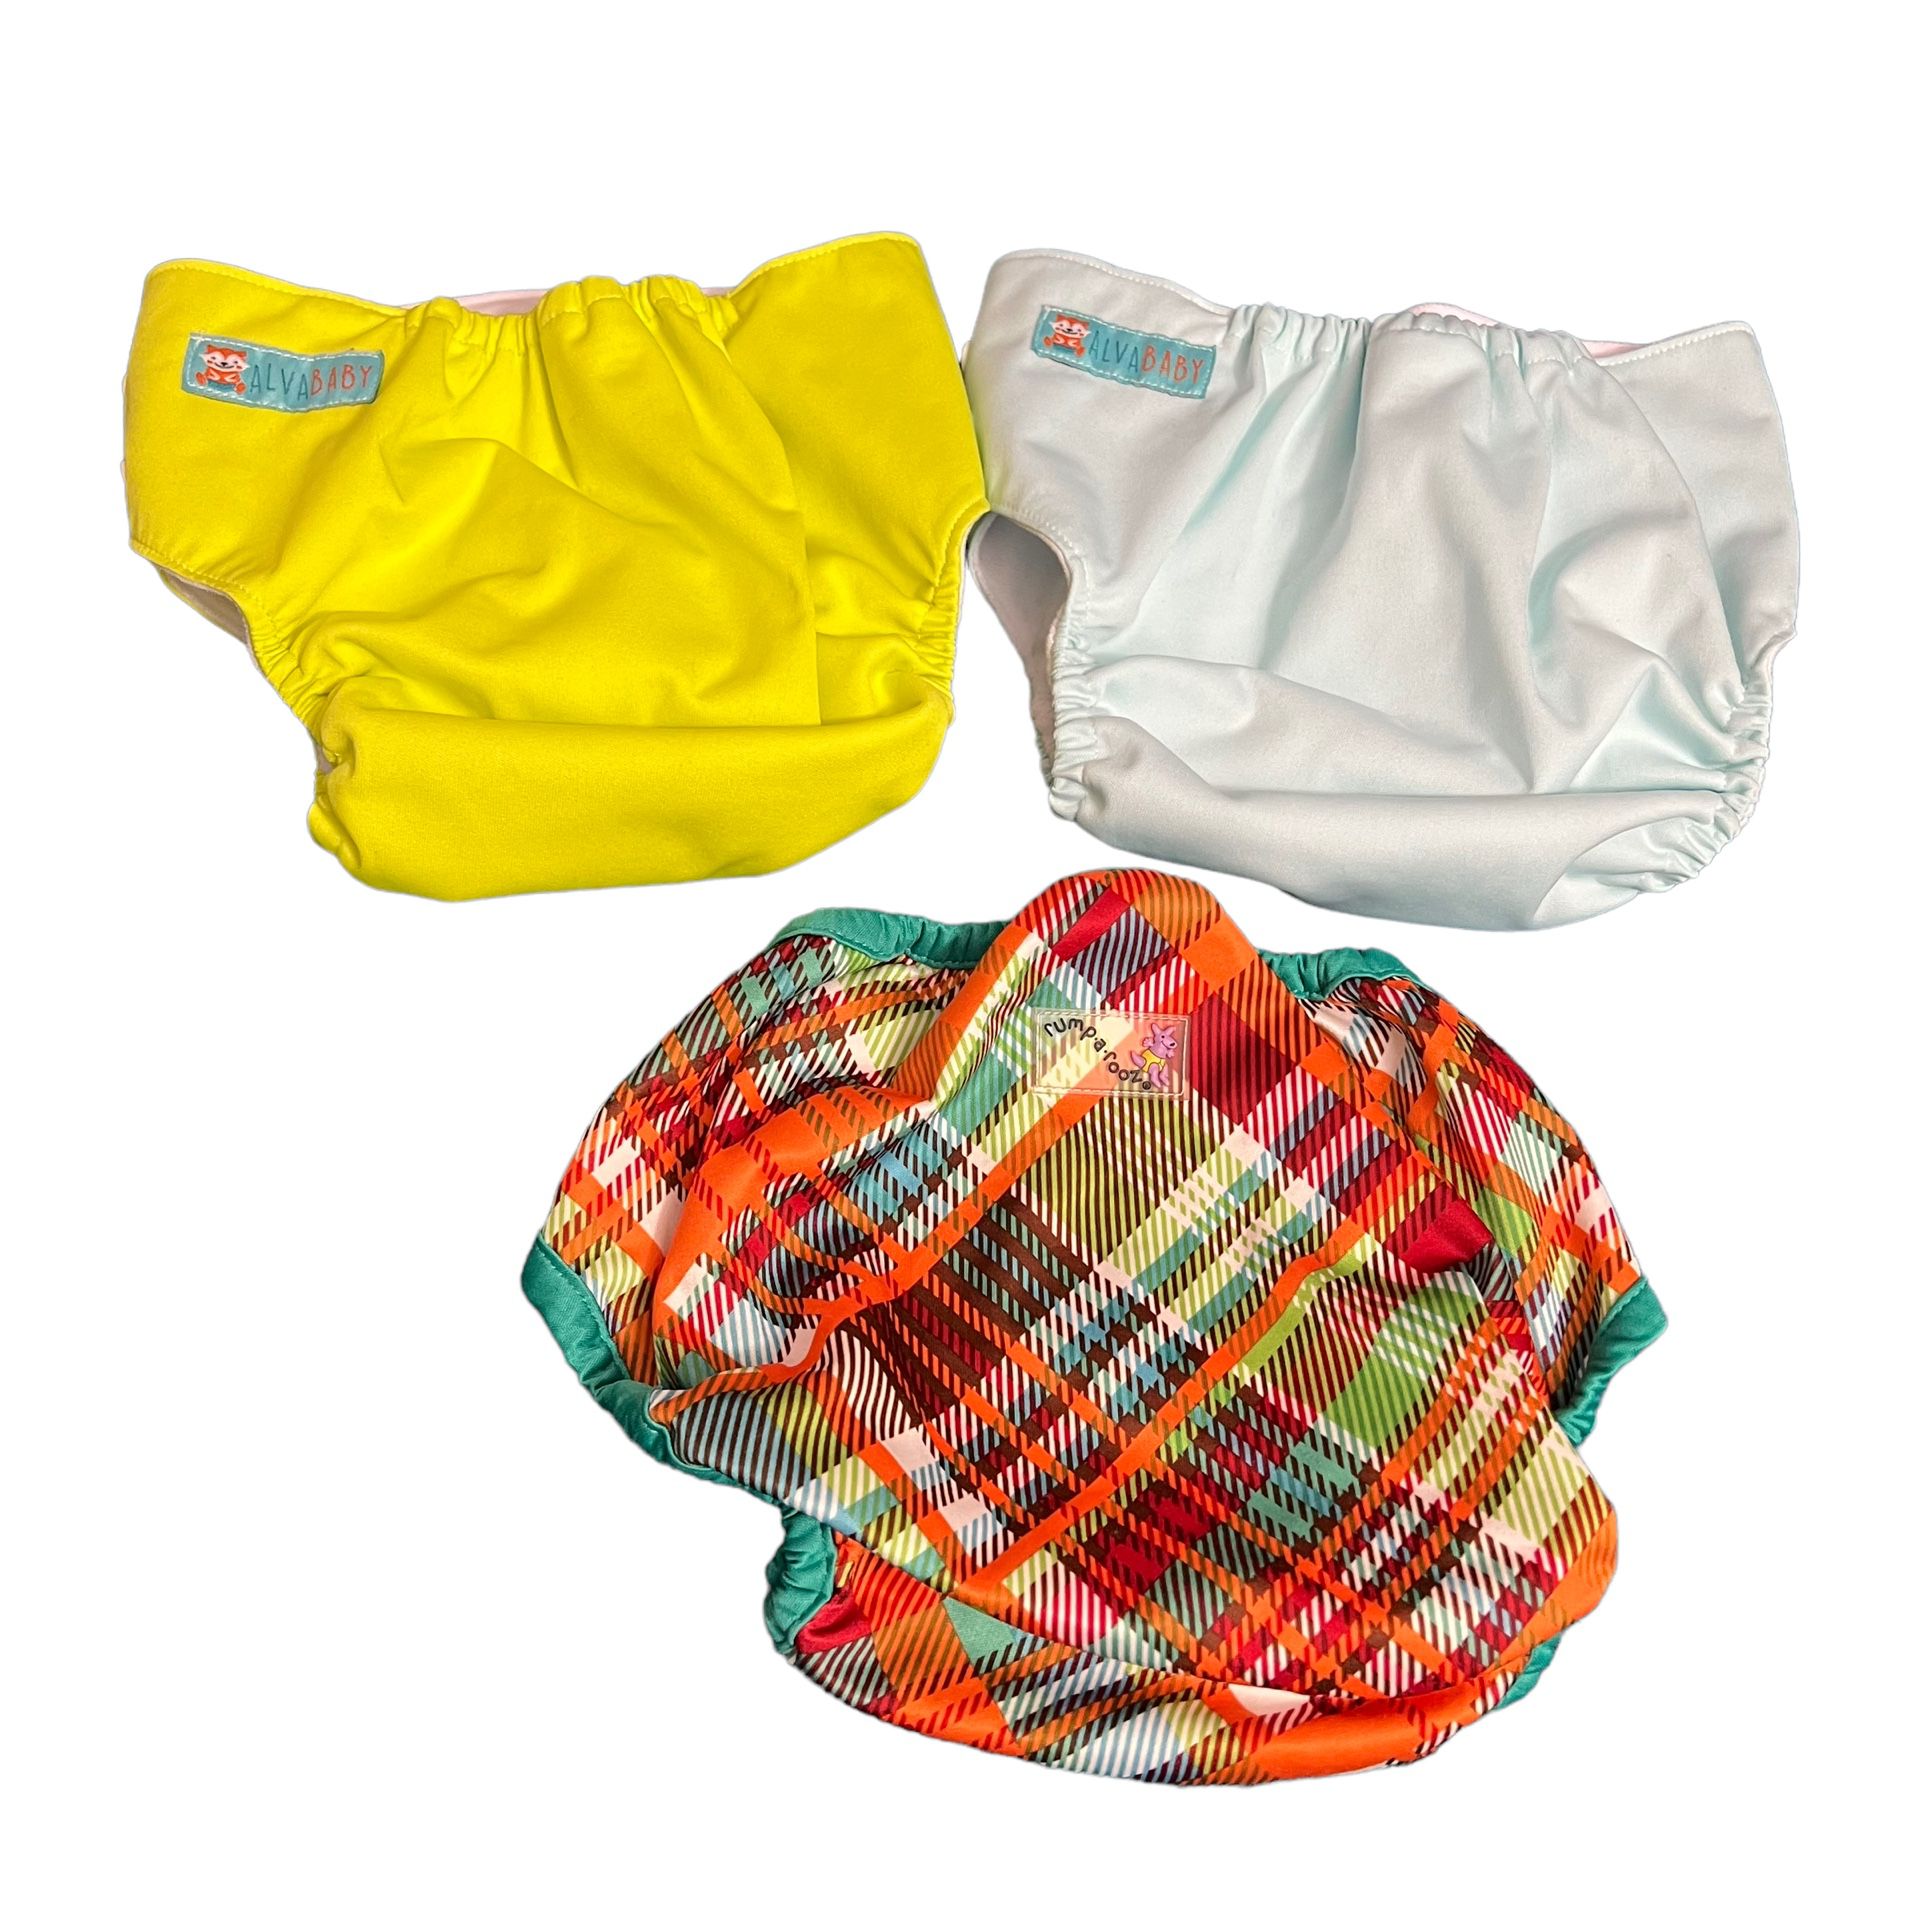 Lot of 3 Baby Cloth Diaper Cover, Economical Qty 2 ALVA BABY, Qty 1 Rump-a-rooz